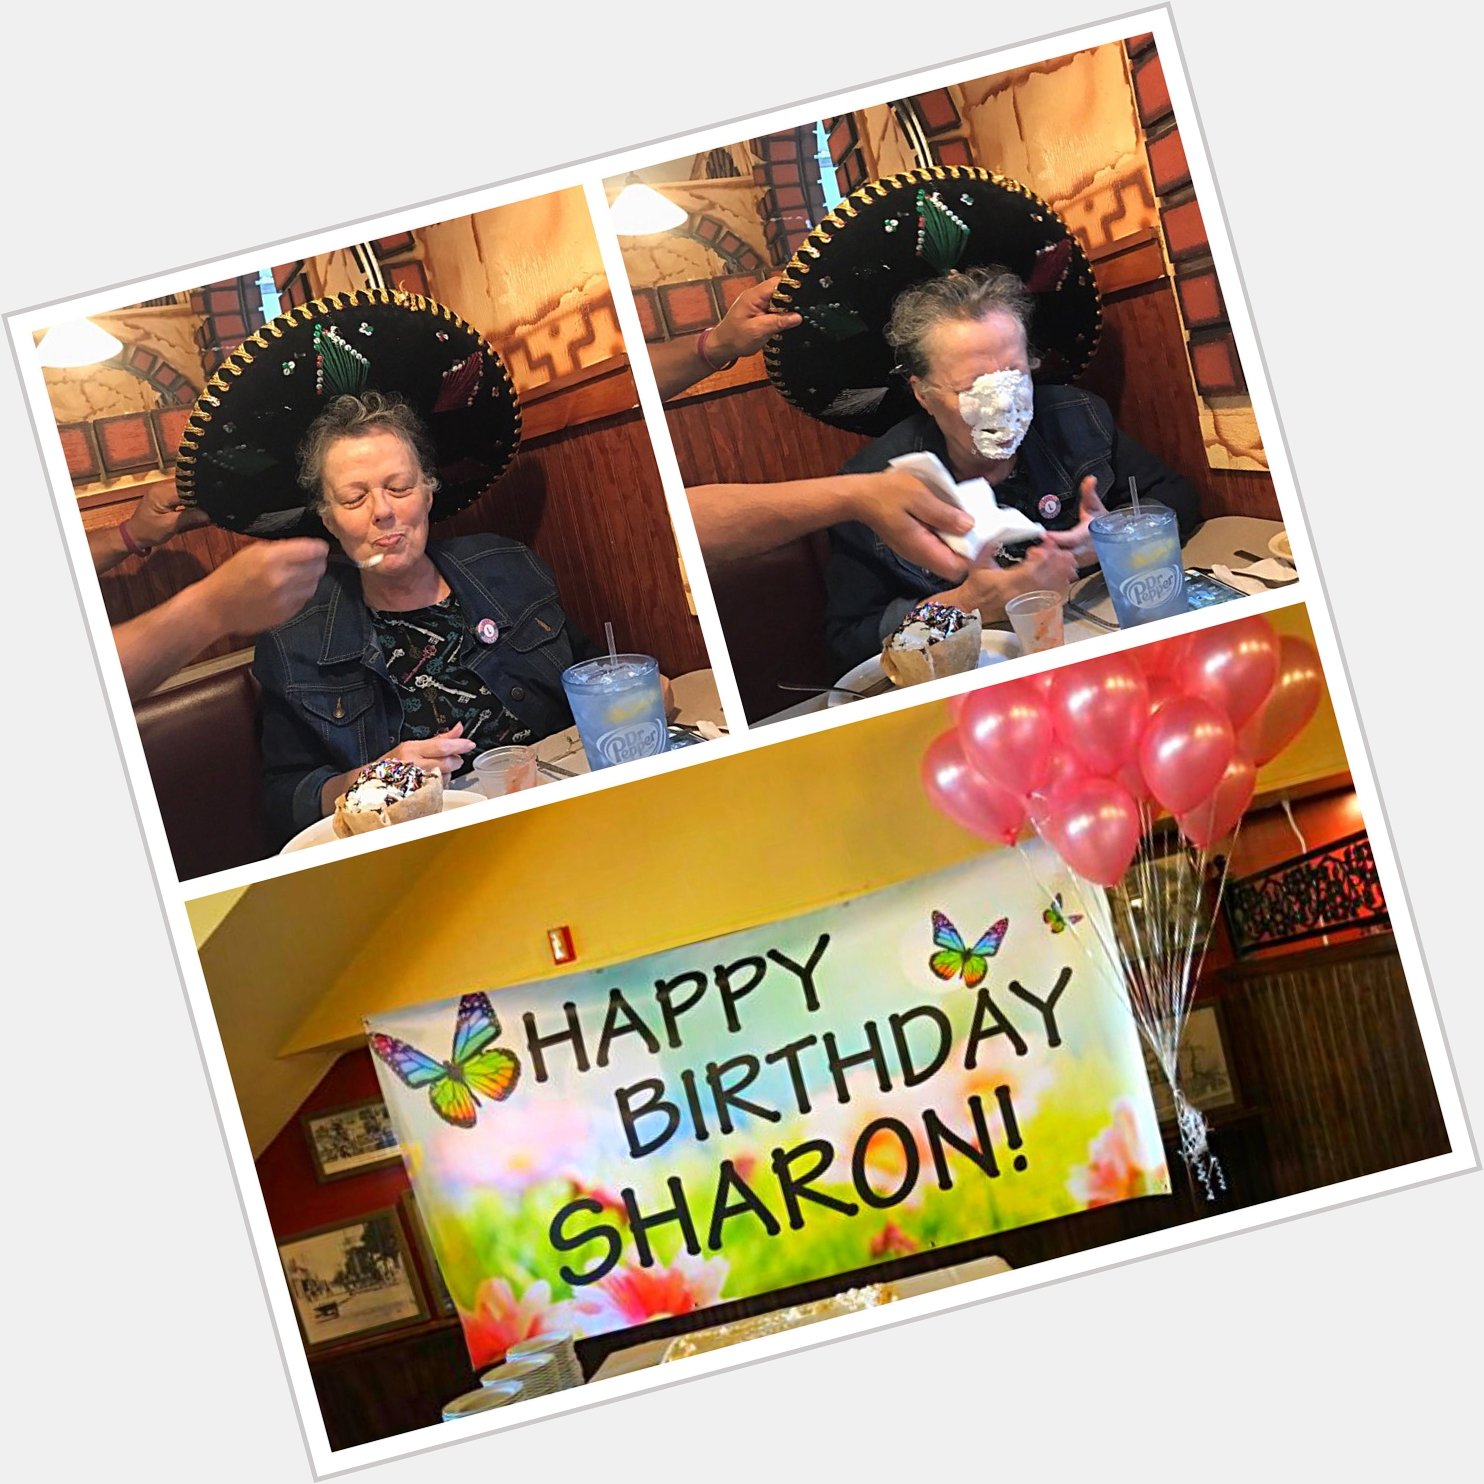 Happy Birthday Sharon Lawrence!  Many happy returns!  